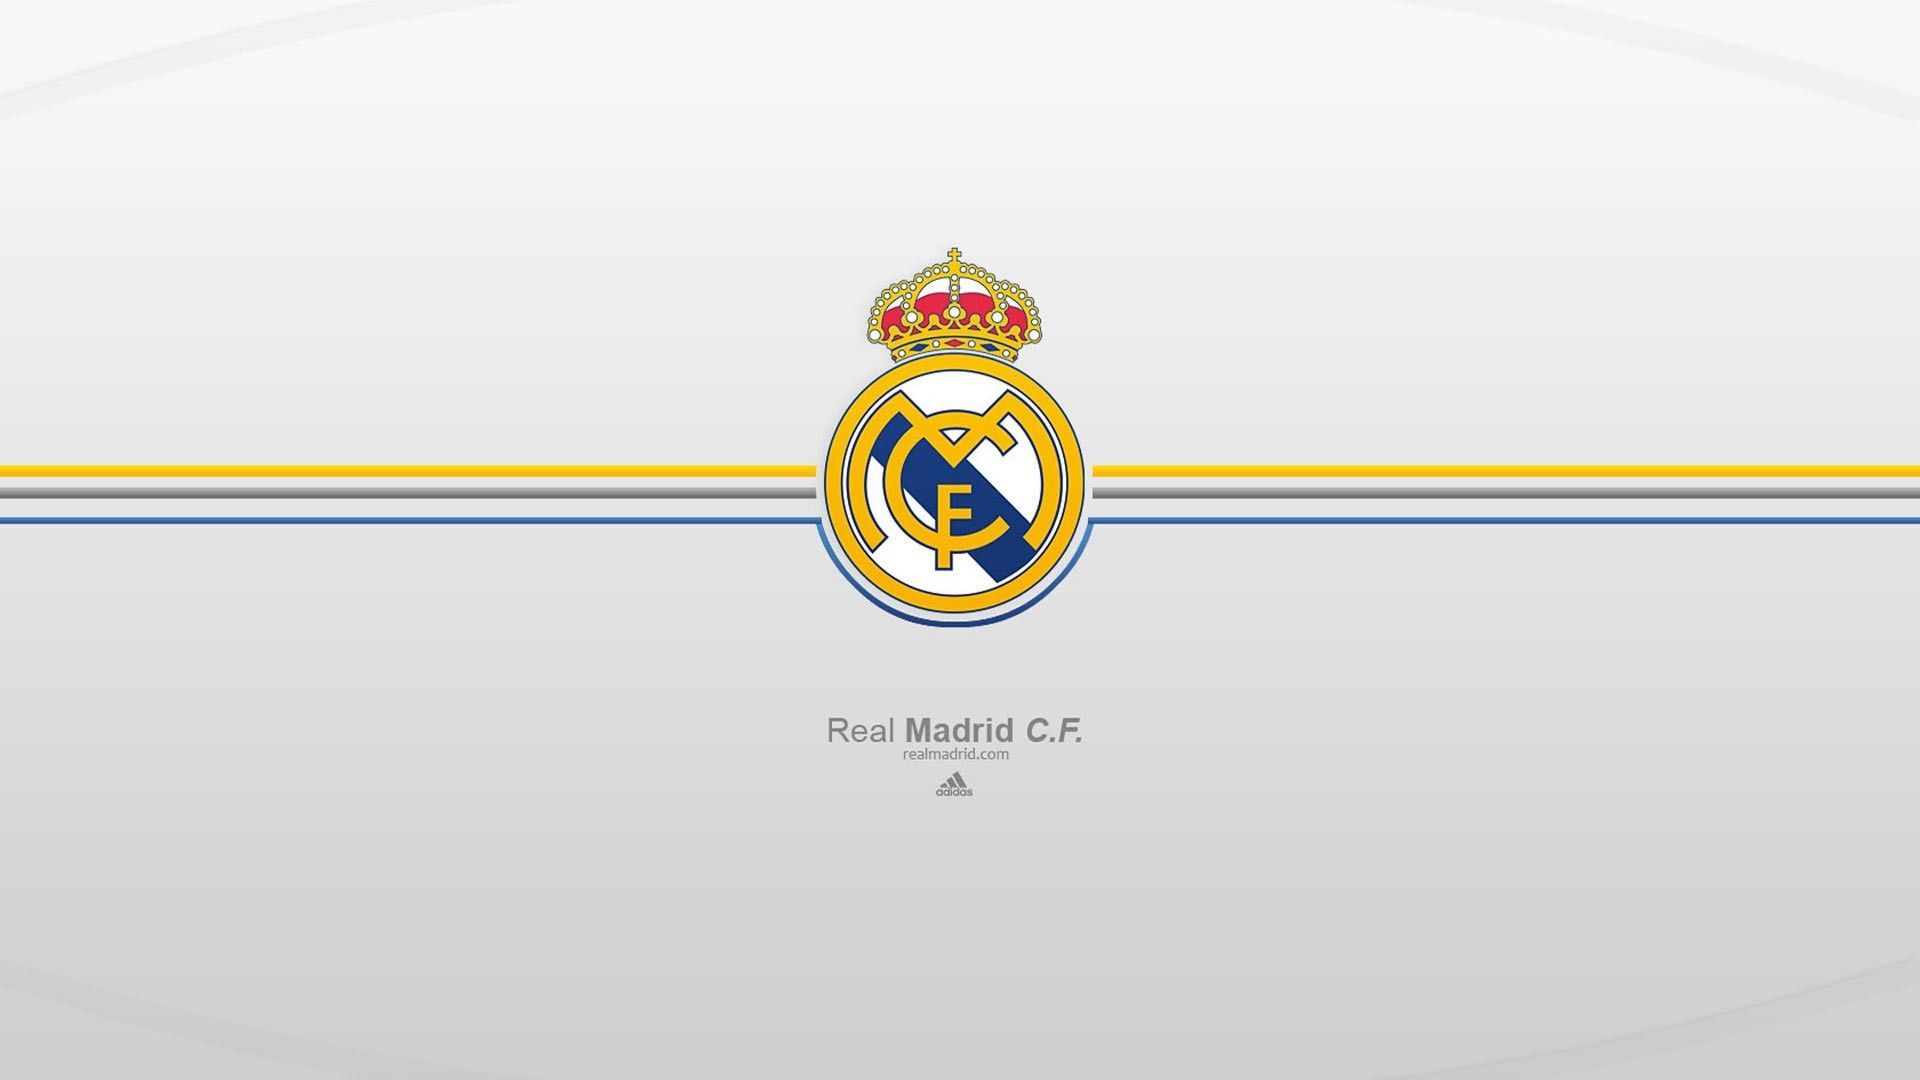 Real Madrid CF Mac Background. Best Wallpaper HD. Real madrid wallpaper, Madrid wallpaper, Real madrid logo wallpaper